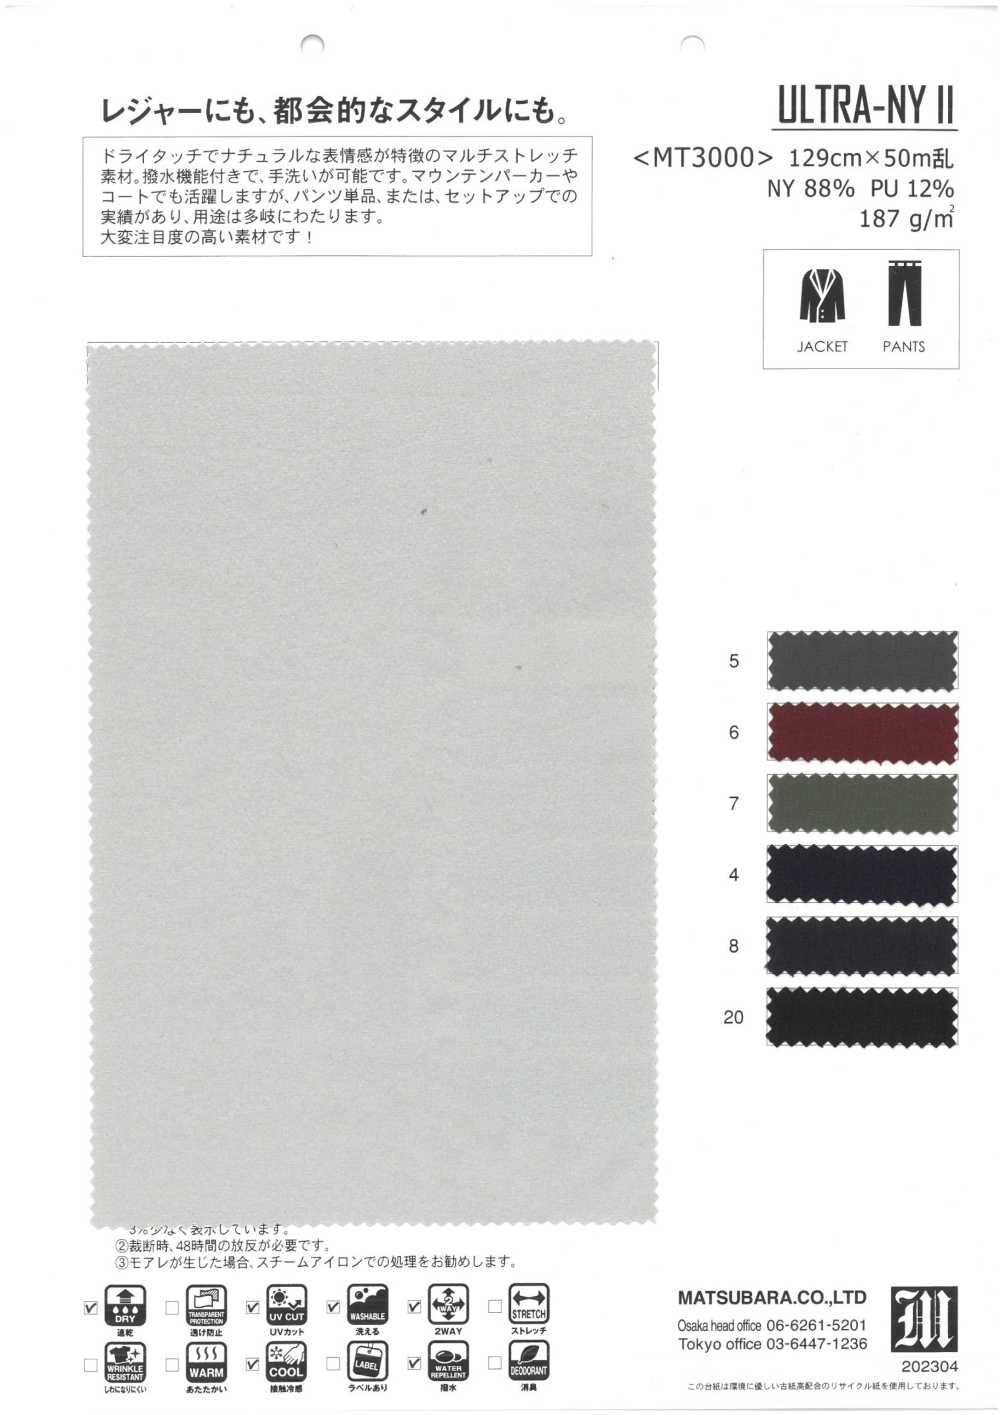 MT3000 ULTRA-NYⅡ[Textile / Fabric] Matsubara